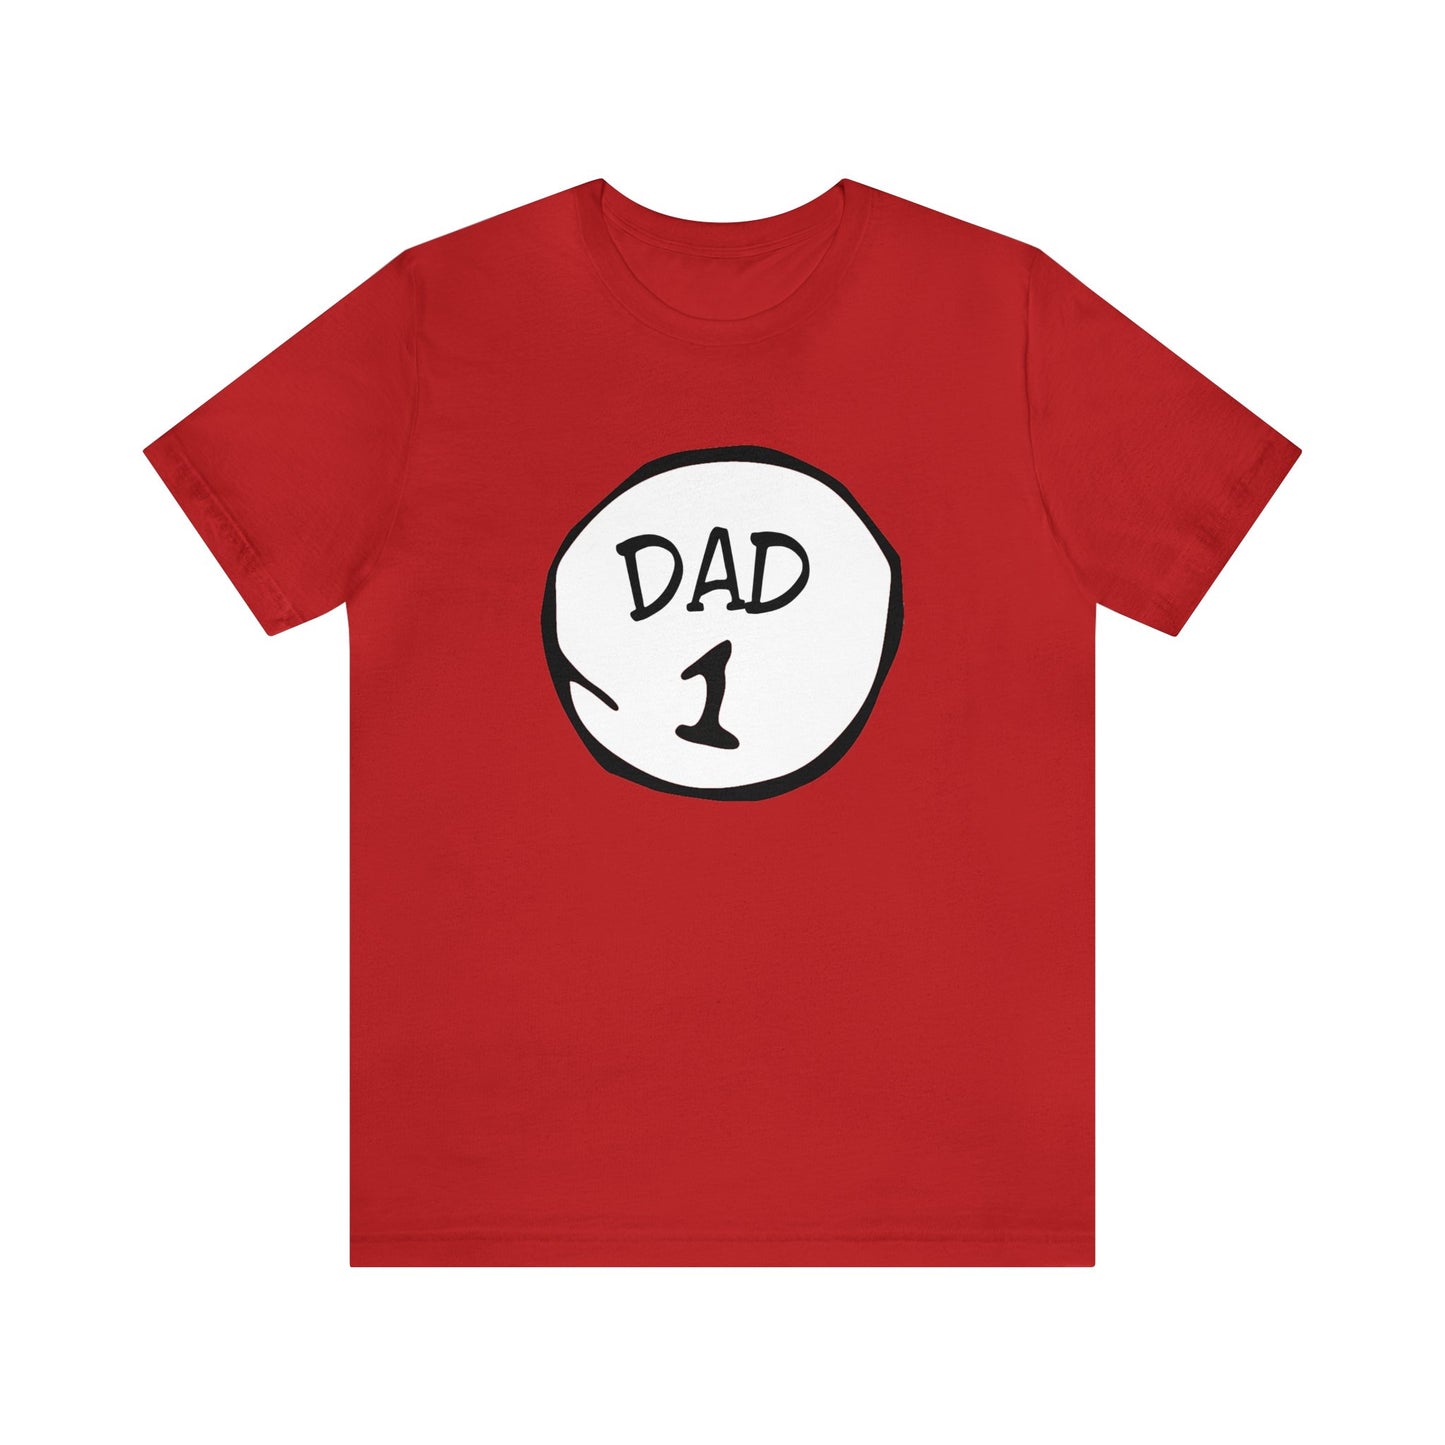 DAD 1 Adult T-Shirt